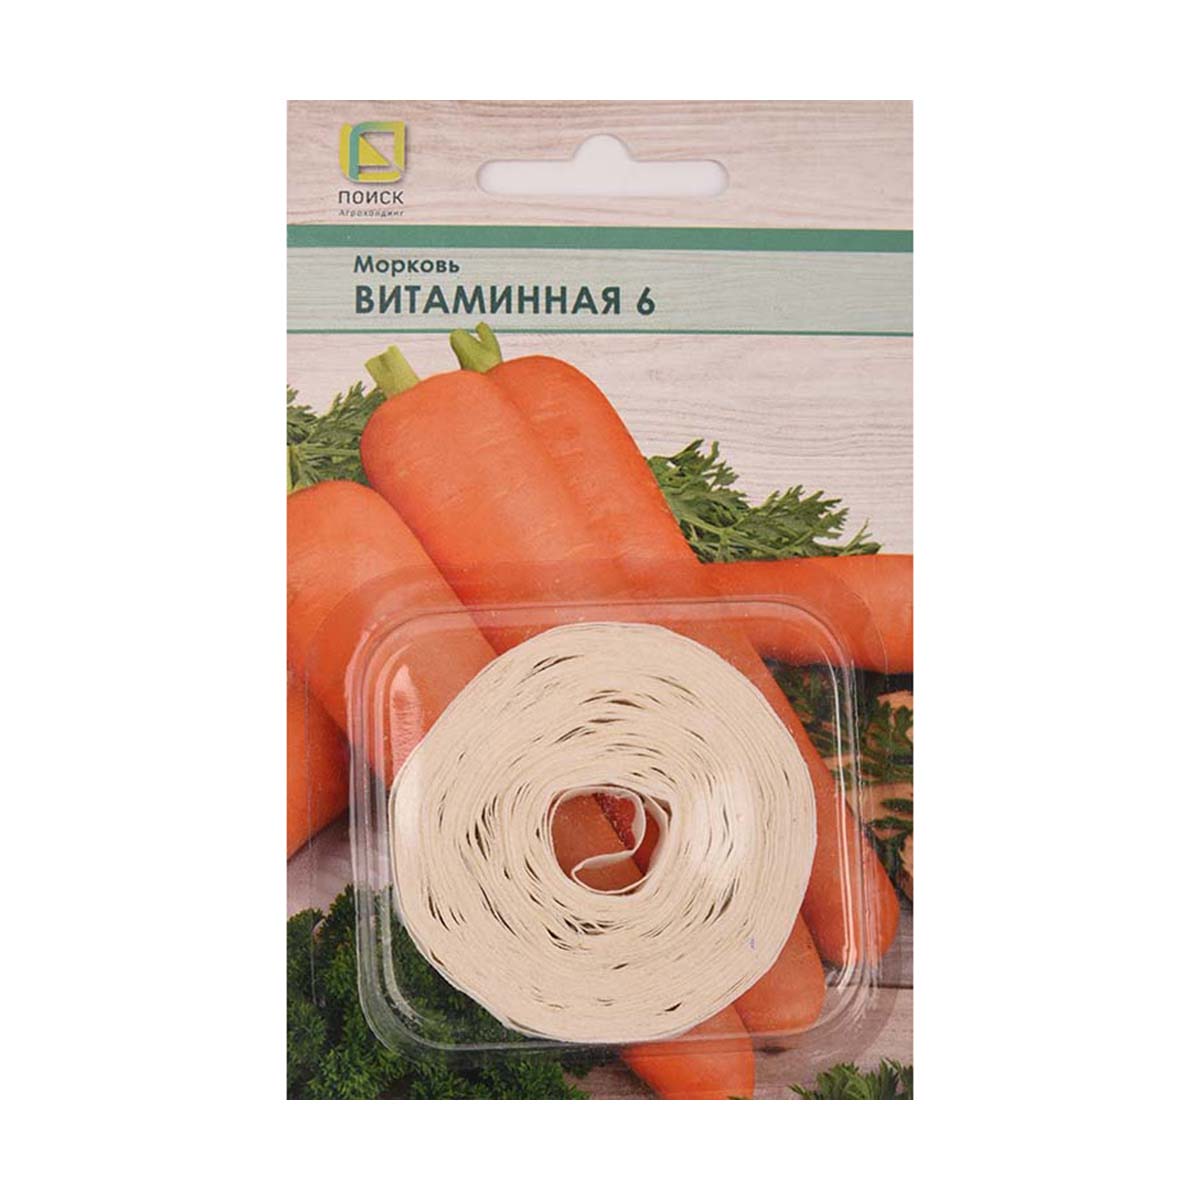 Семена на ленте морковь "витаминная 6" 8 м (10/100) "поиск"